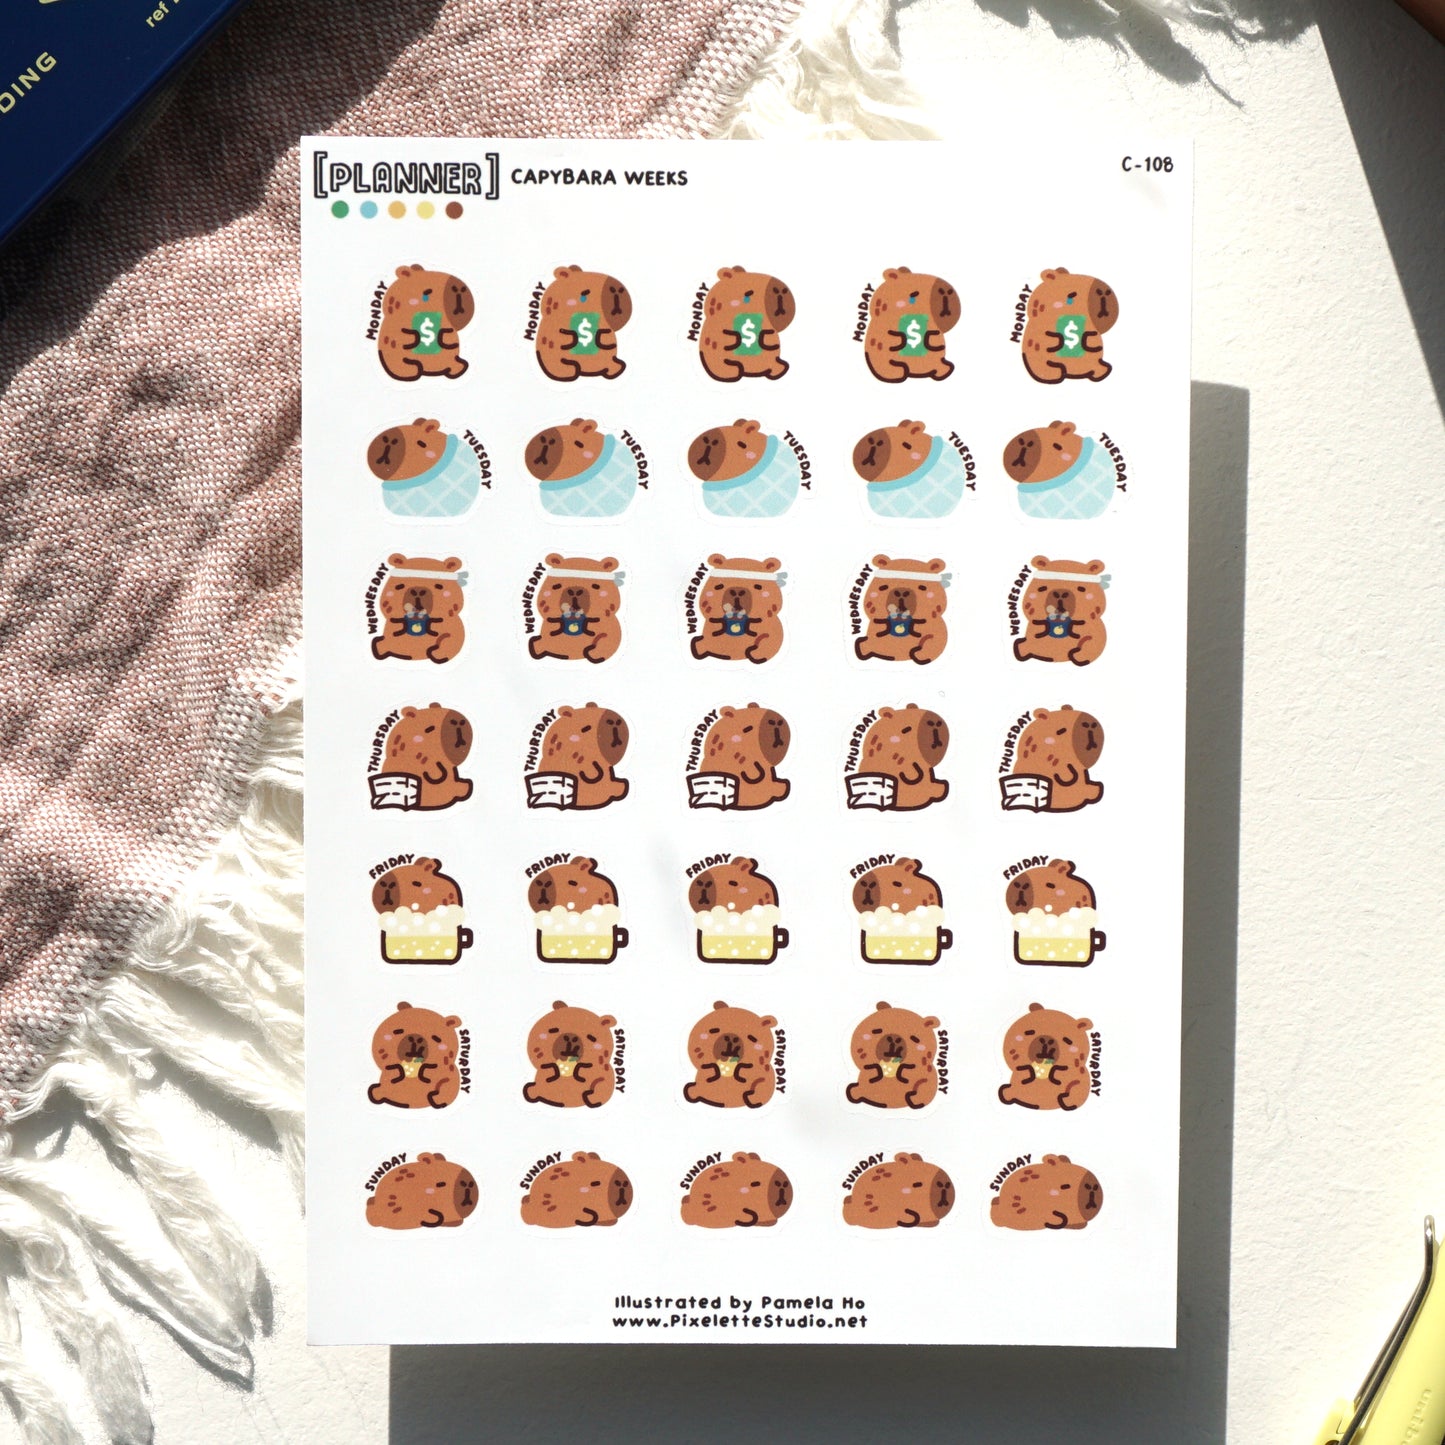 Capybara Weeks Sticker Sheet